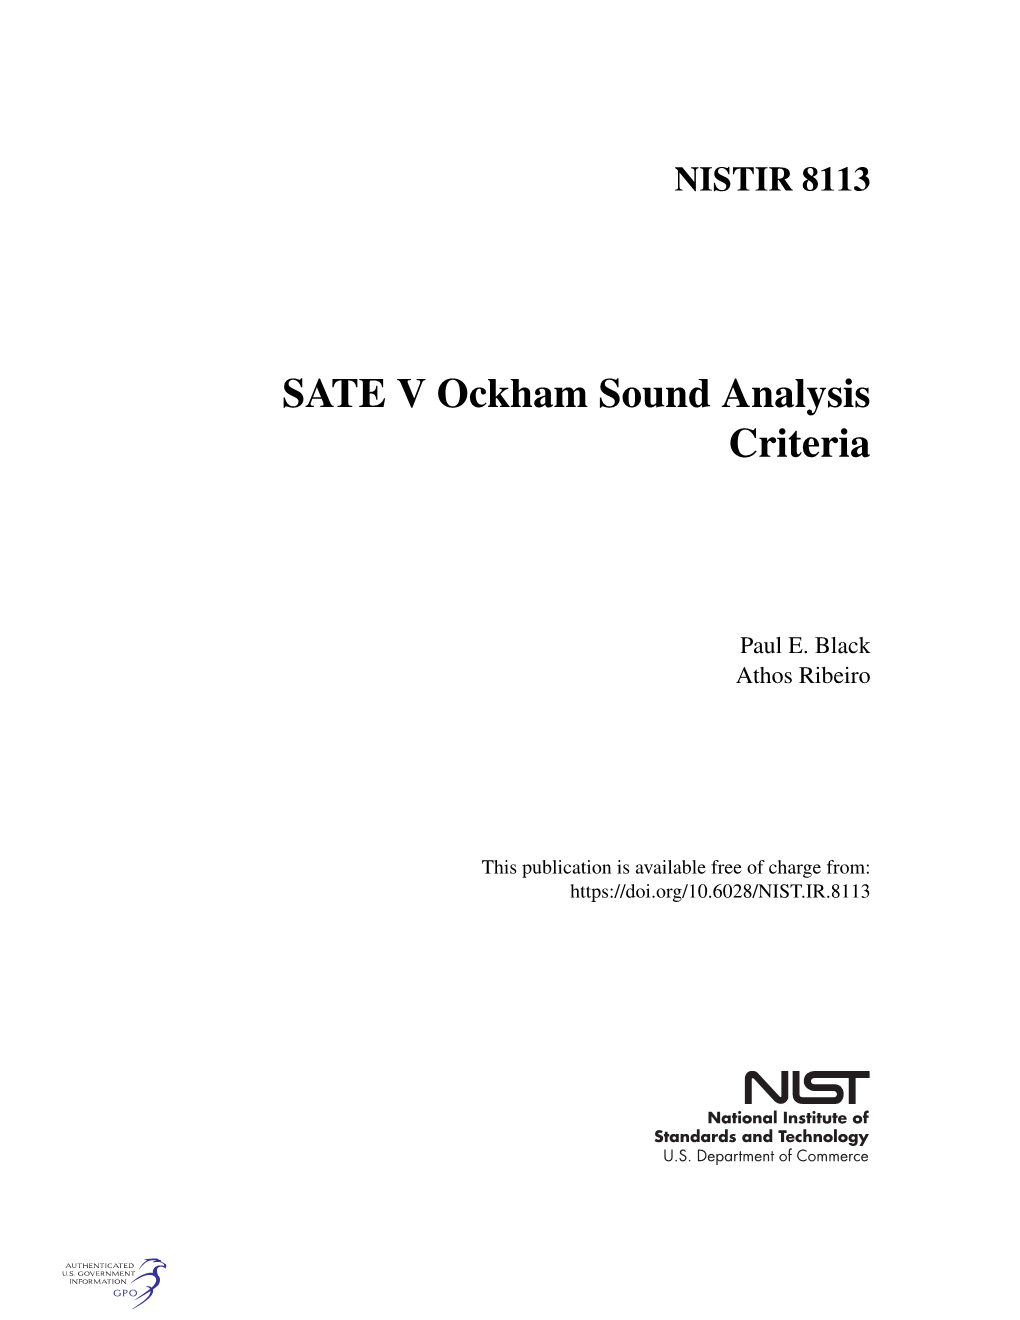 SATE V Ockham Sound Analysis Criteria